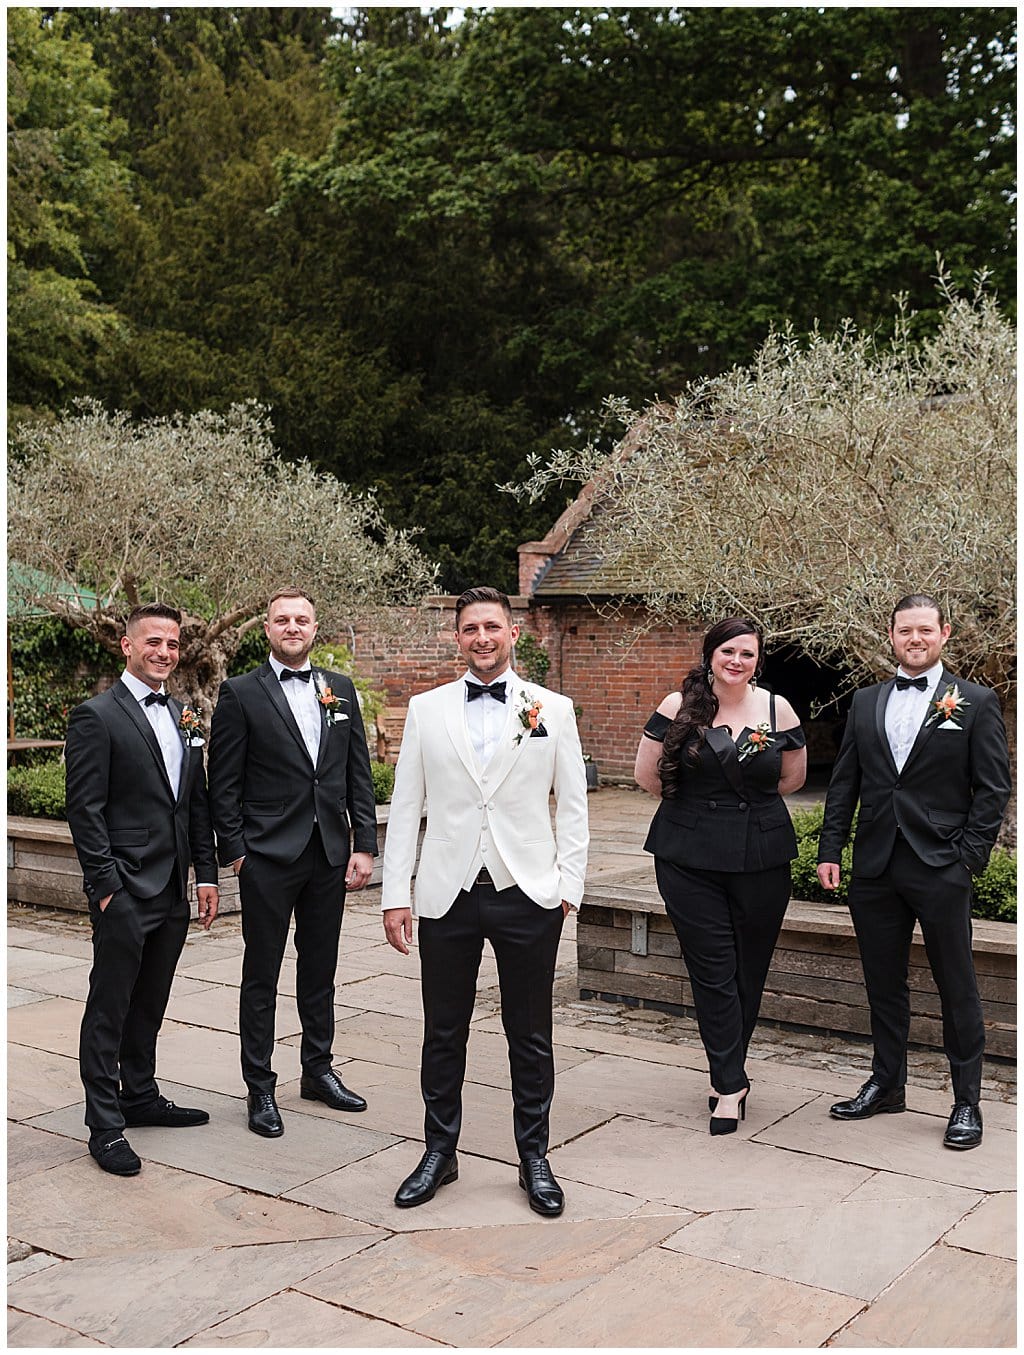 Groom, groomsmen and grooms woman wearing classic black tie tuxedos. Groom wearing white tuxedo